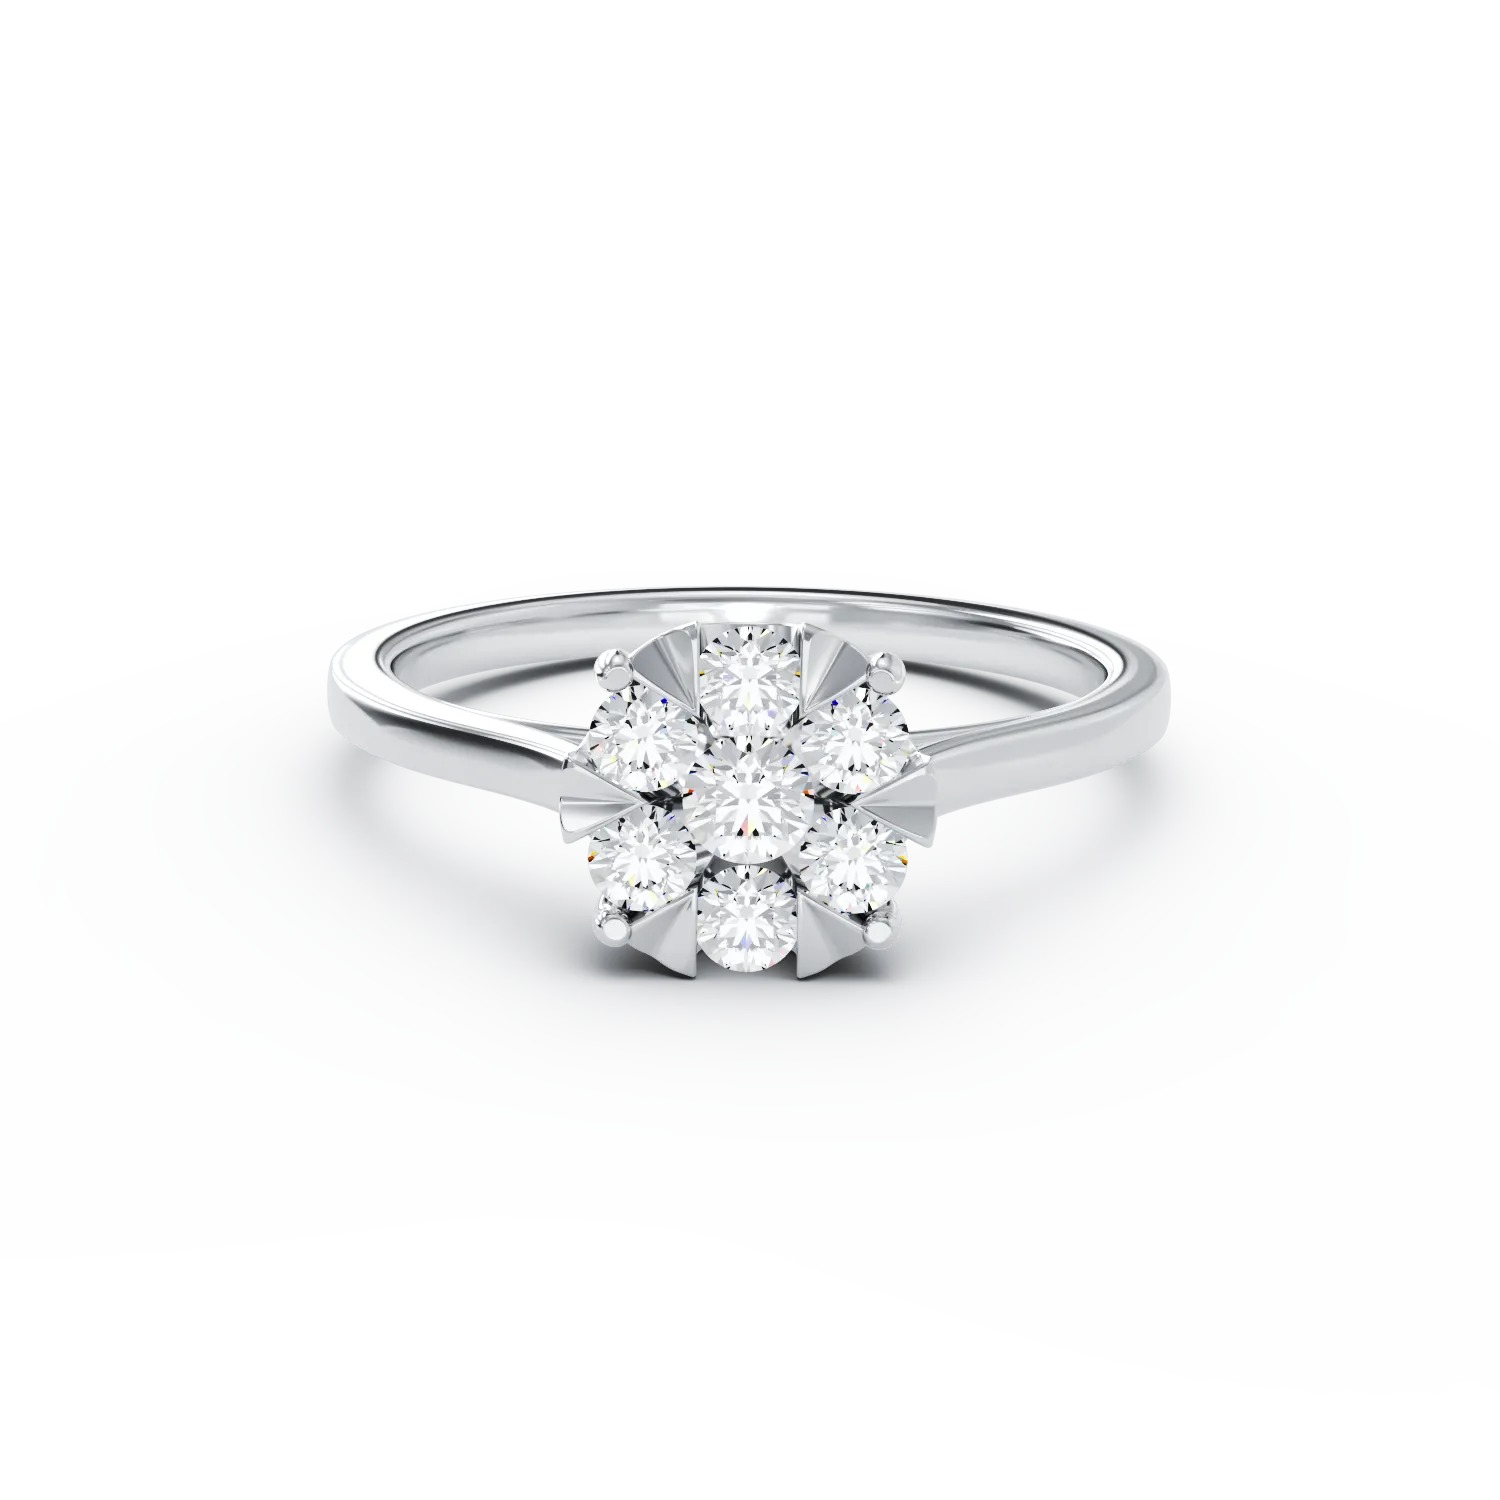 Inel de logodna din aur alb de 18K cu diamante de 0.2ct